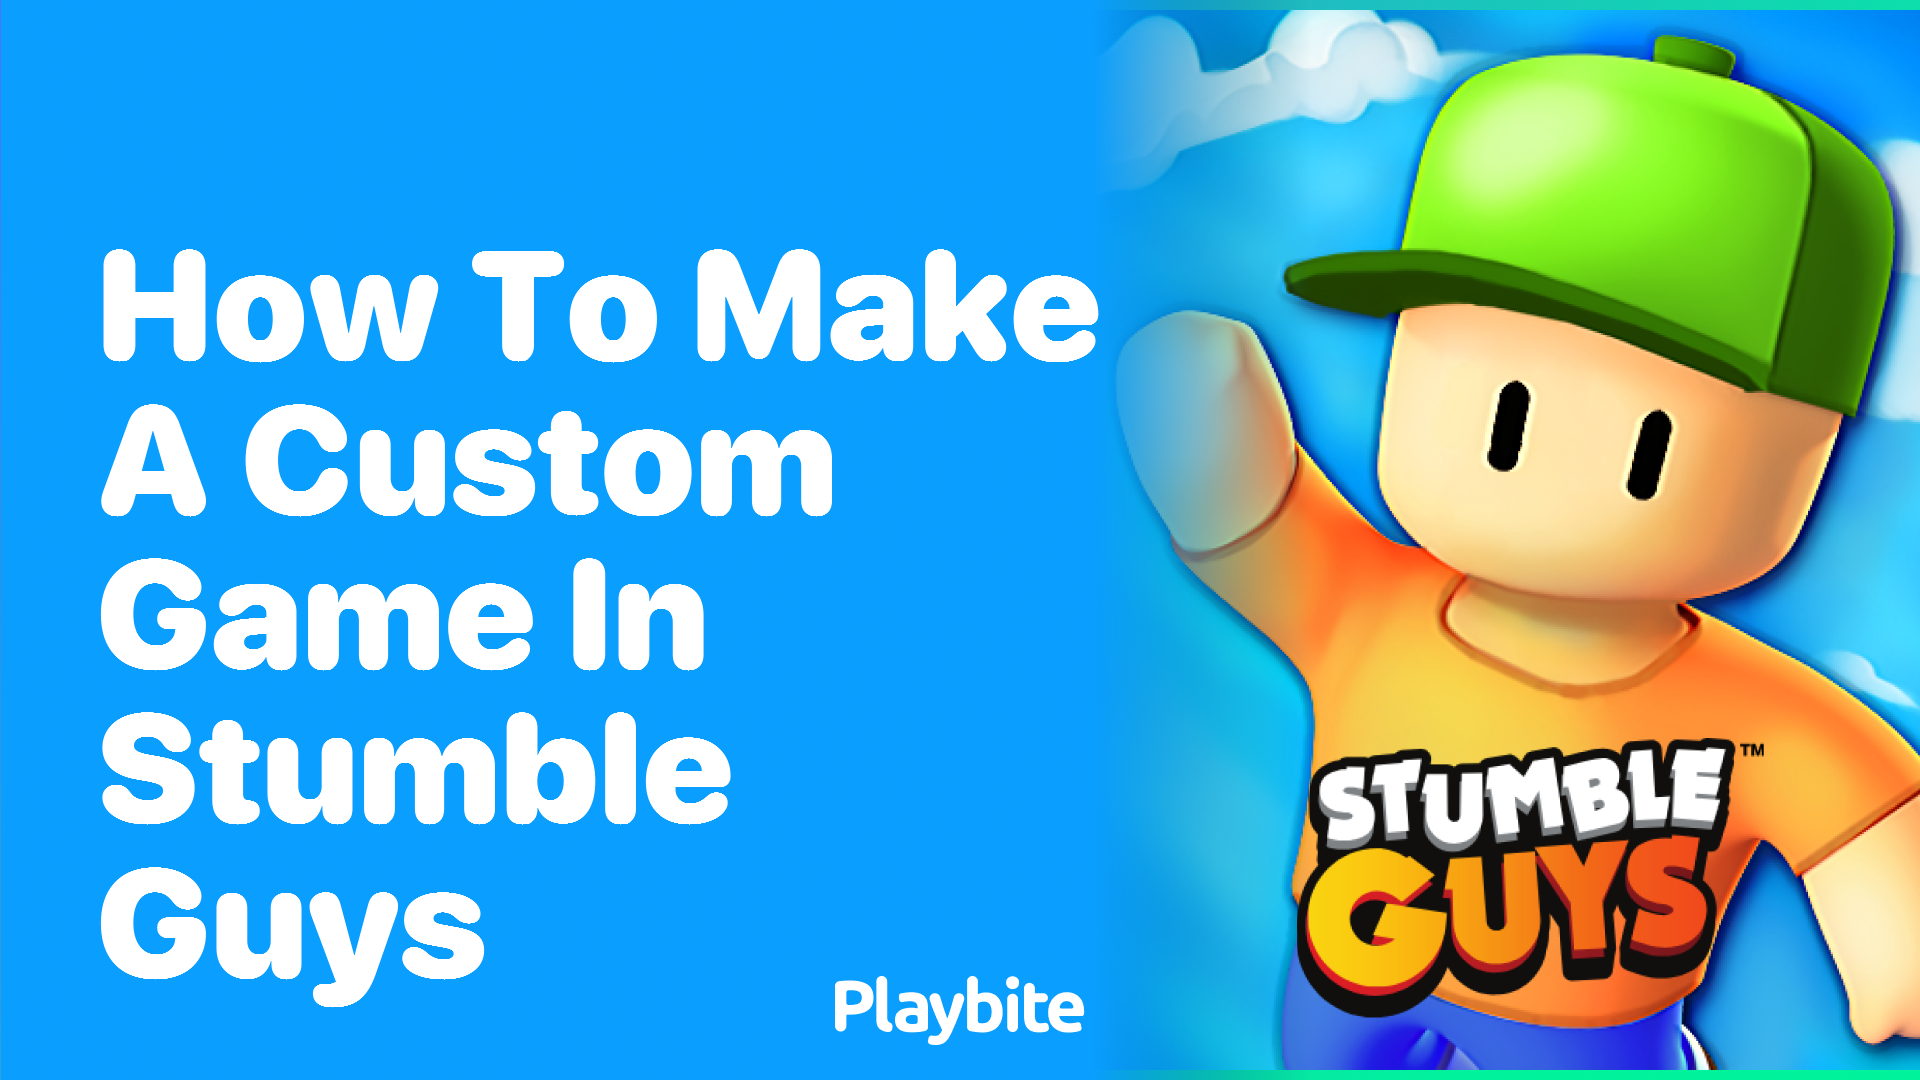 How to Make a Custom Game in Stumble Guys